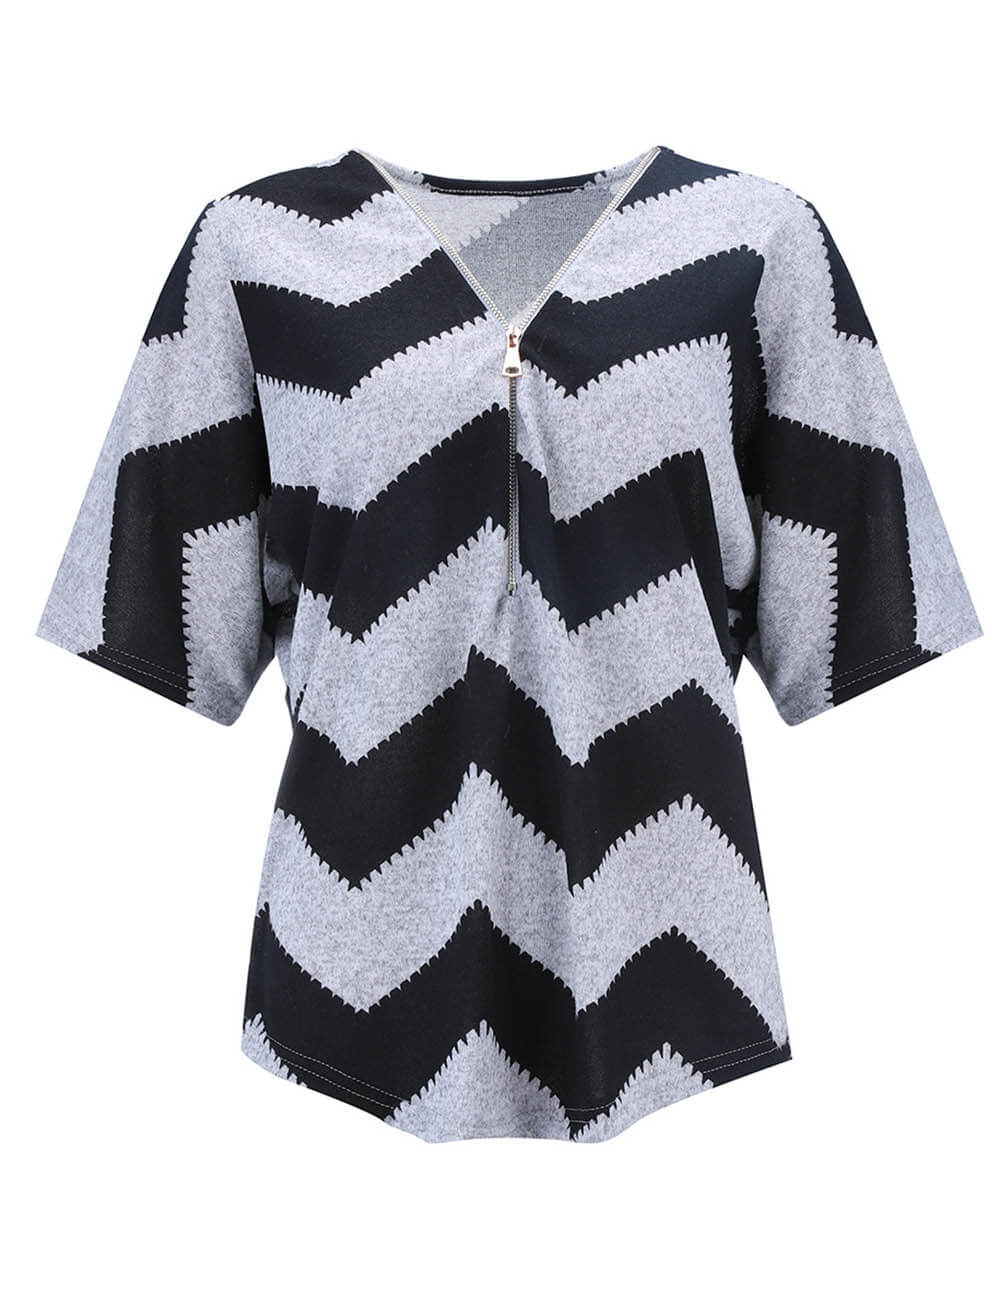  Women's Short Batwing Sleeve Casual Blouse Tops Chevron Print Zipper Up Geometric Striped T Shirts Basic Tees